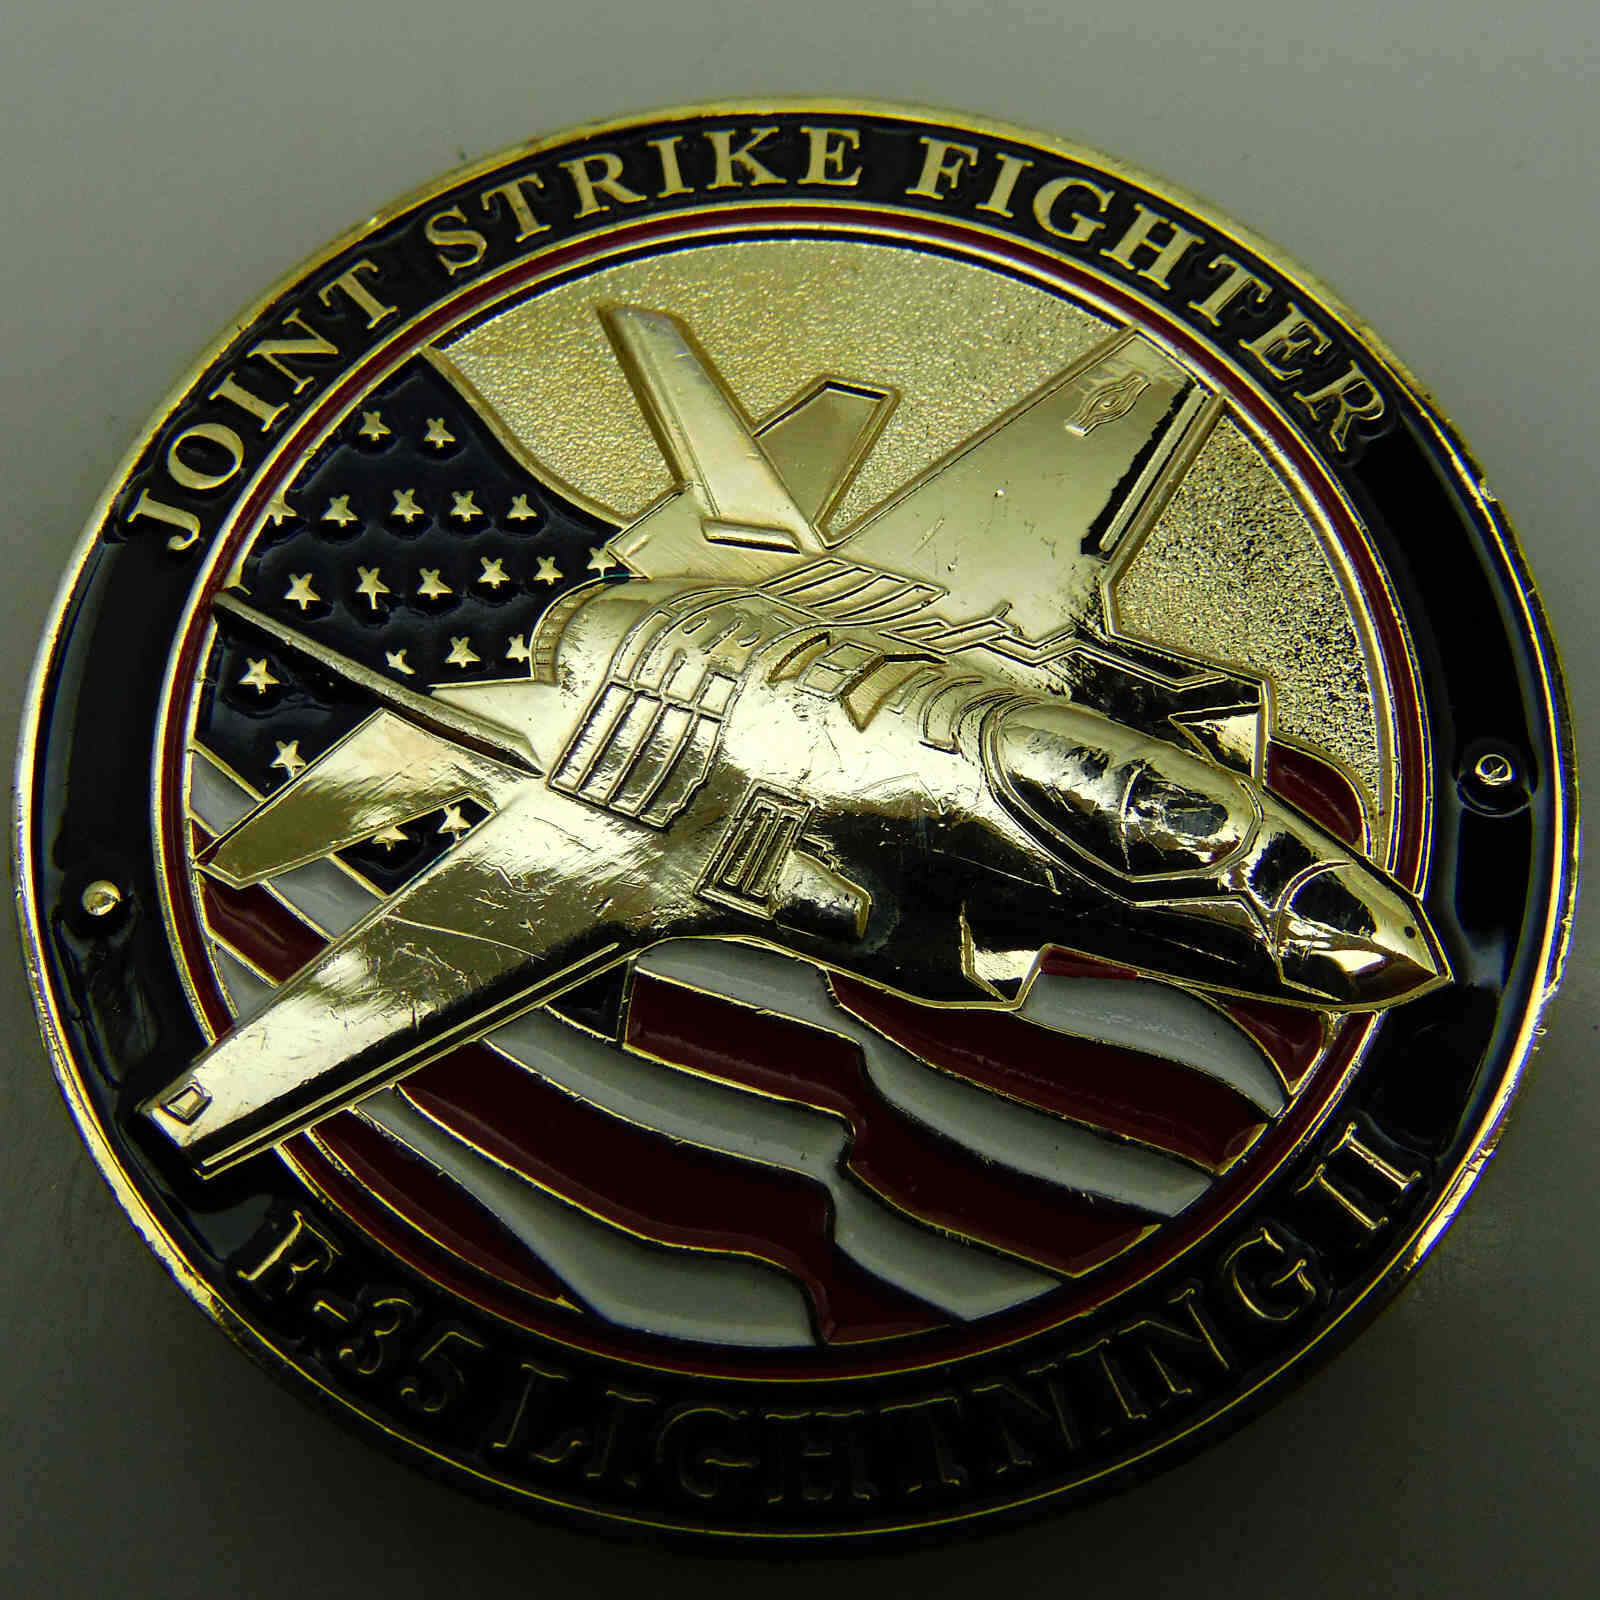 JOINT STRIKE FIGHTER F-35 LIGHTNING II CHALLENGE COIN